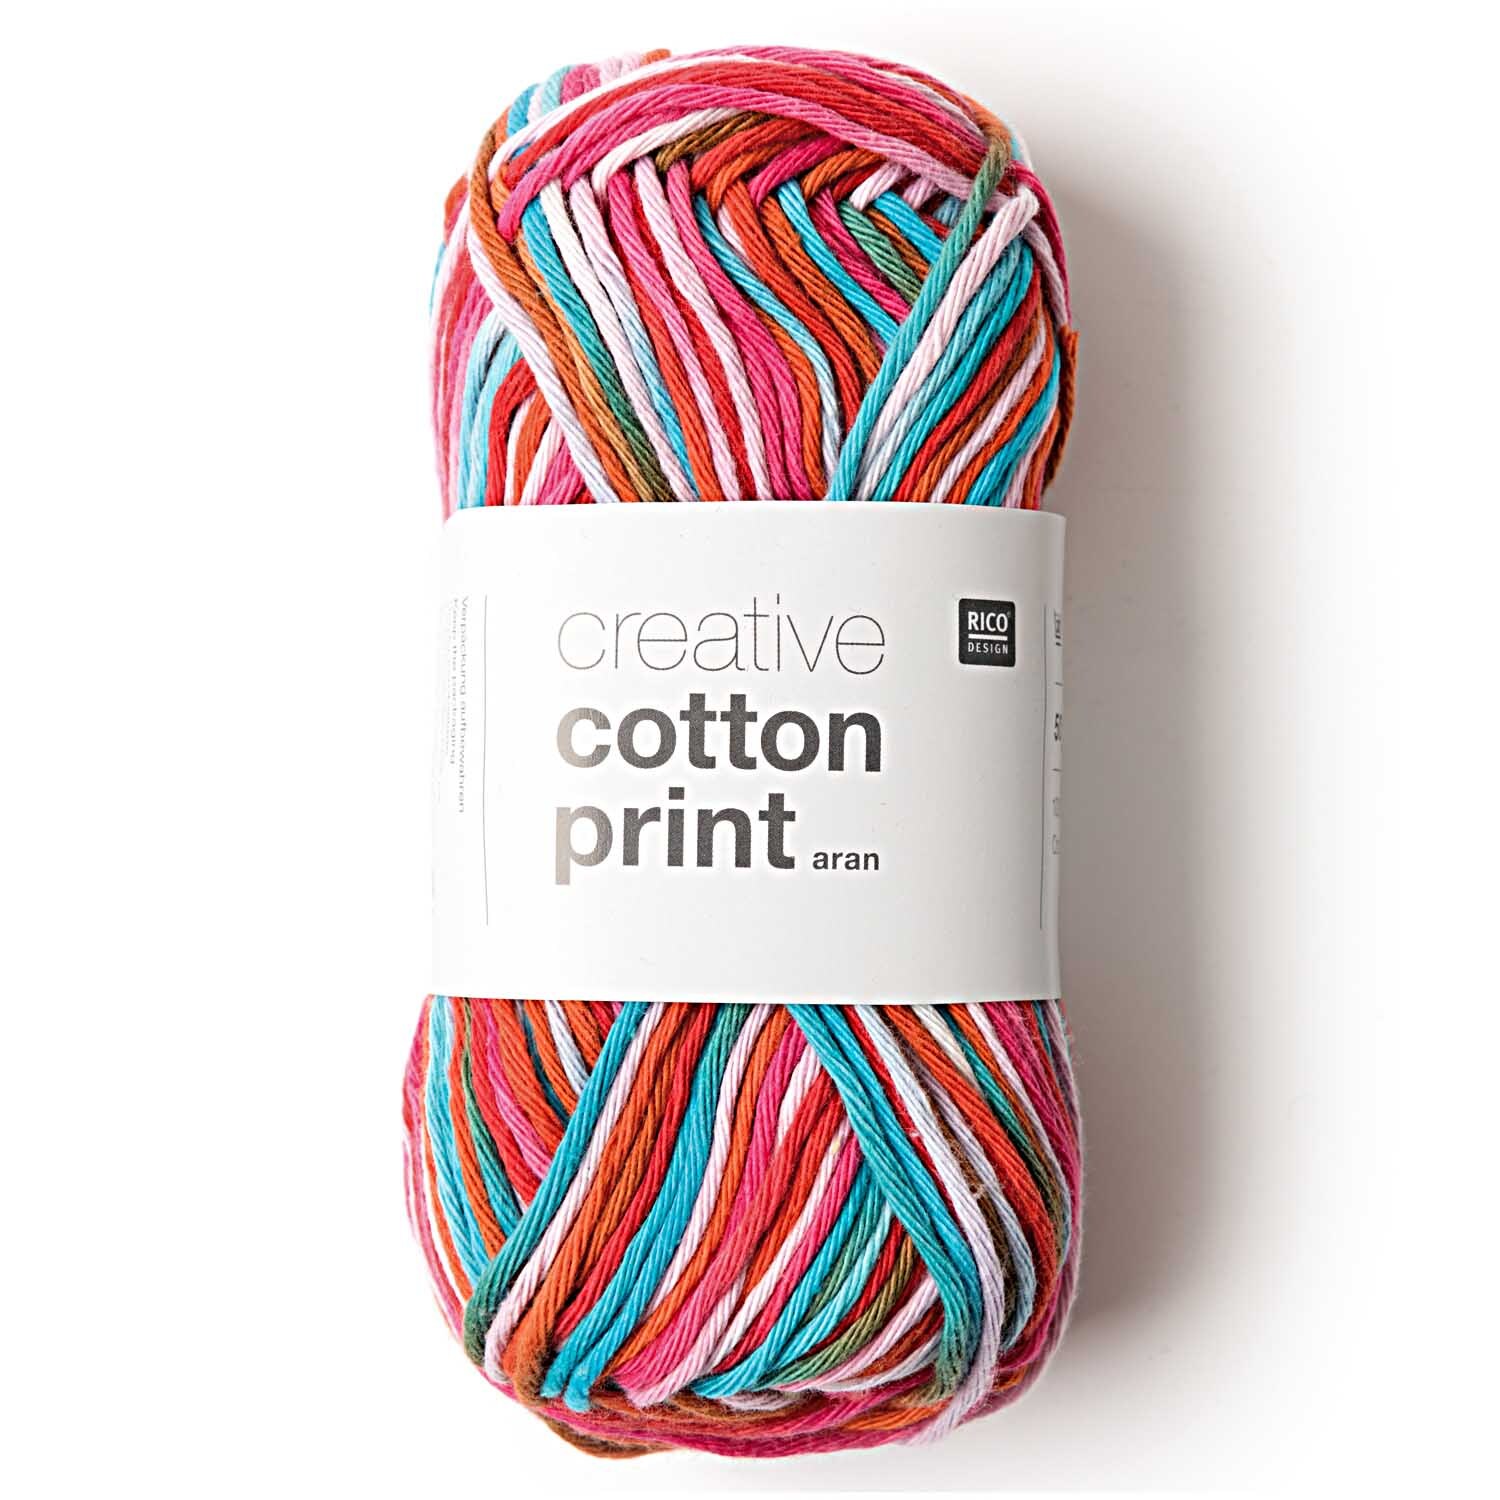 Creative Cotton Print aran